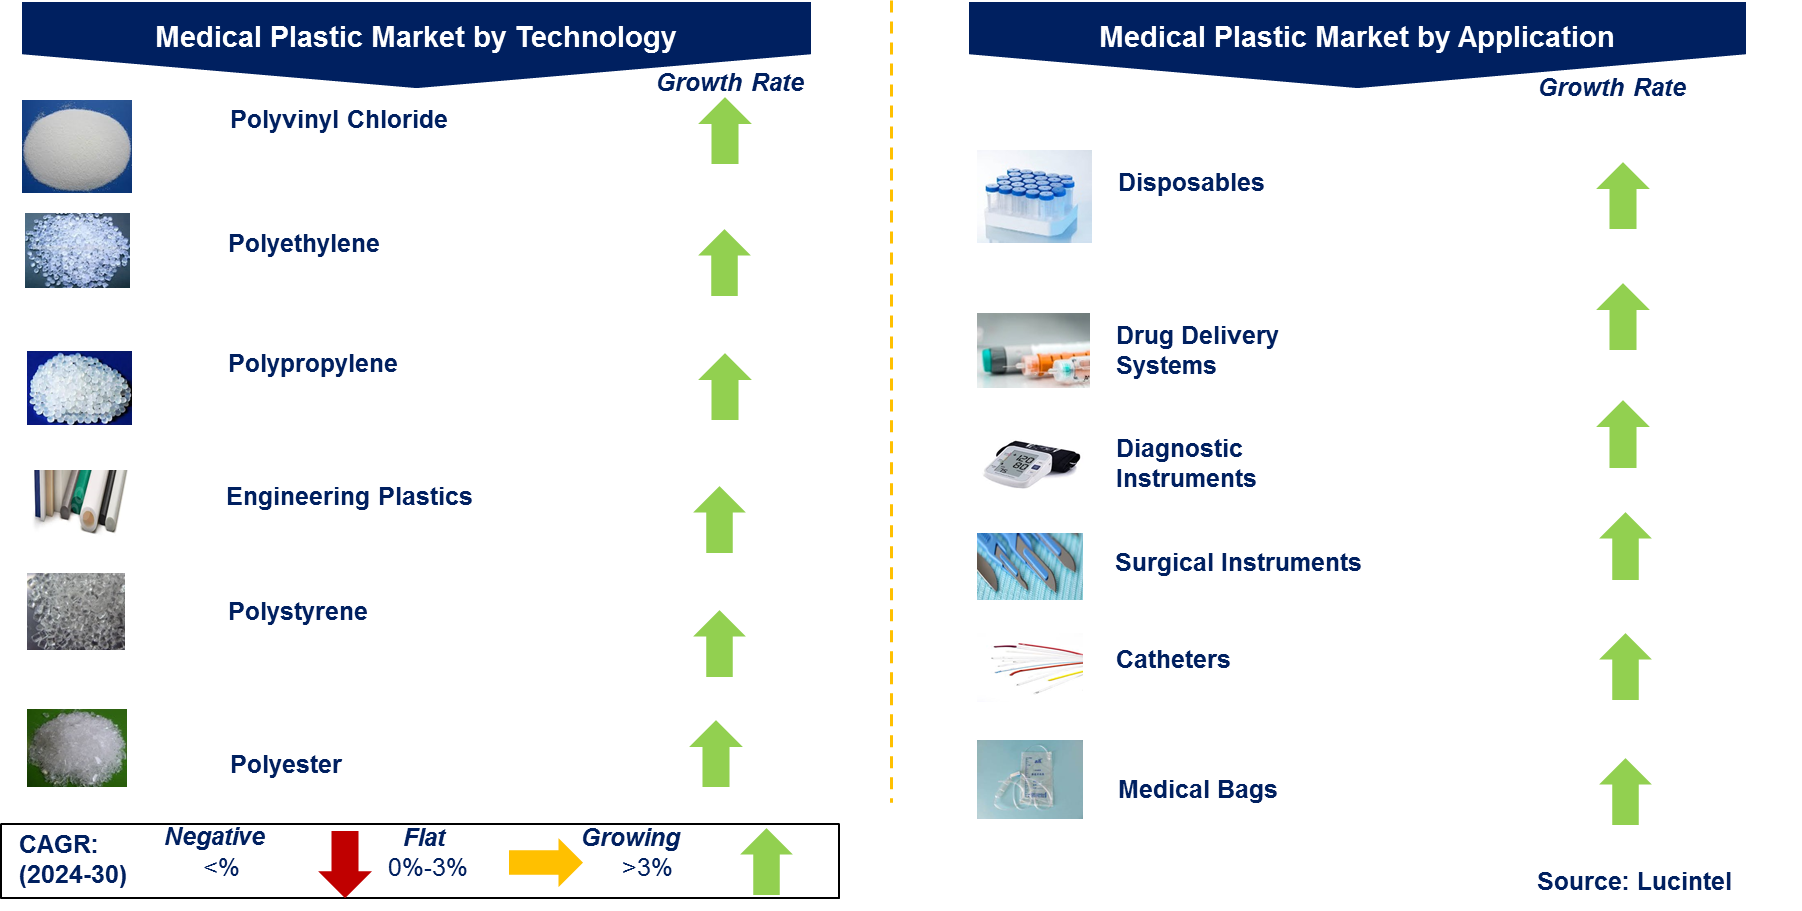  Medical Plastic Market by Segments